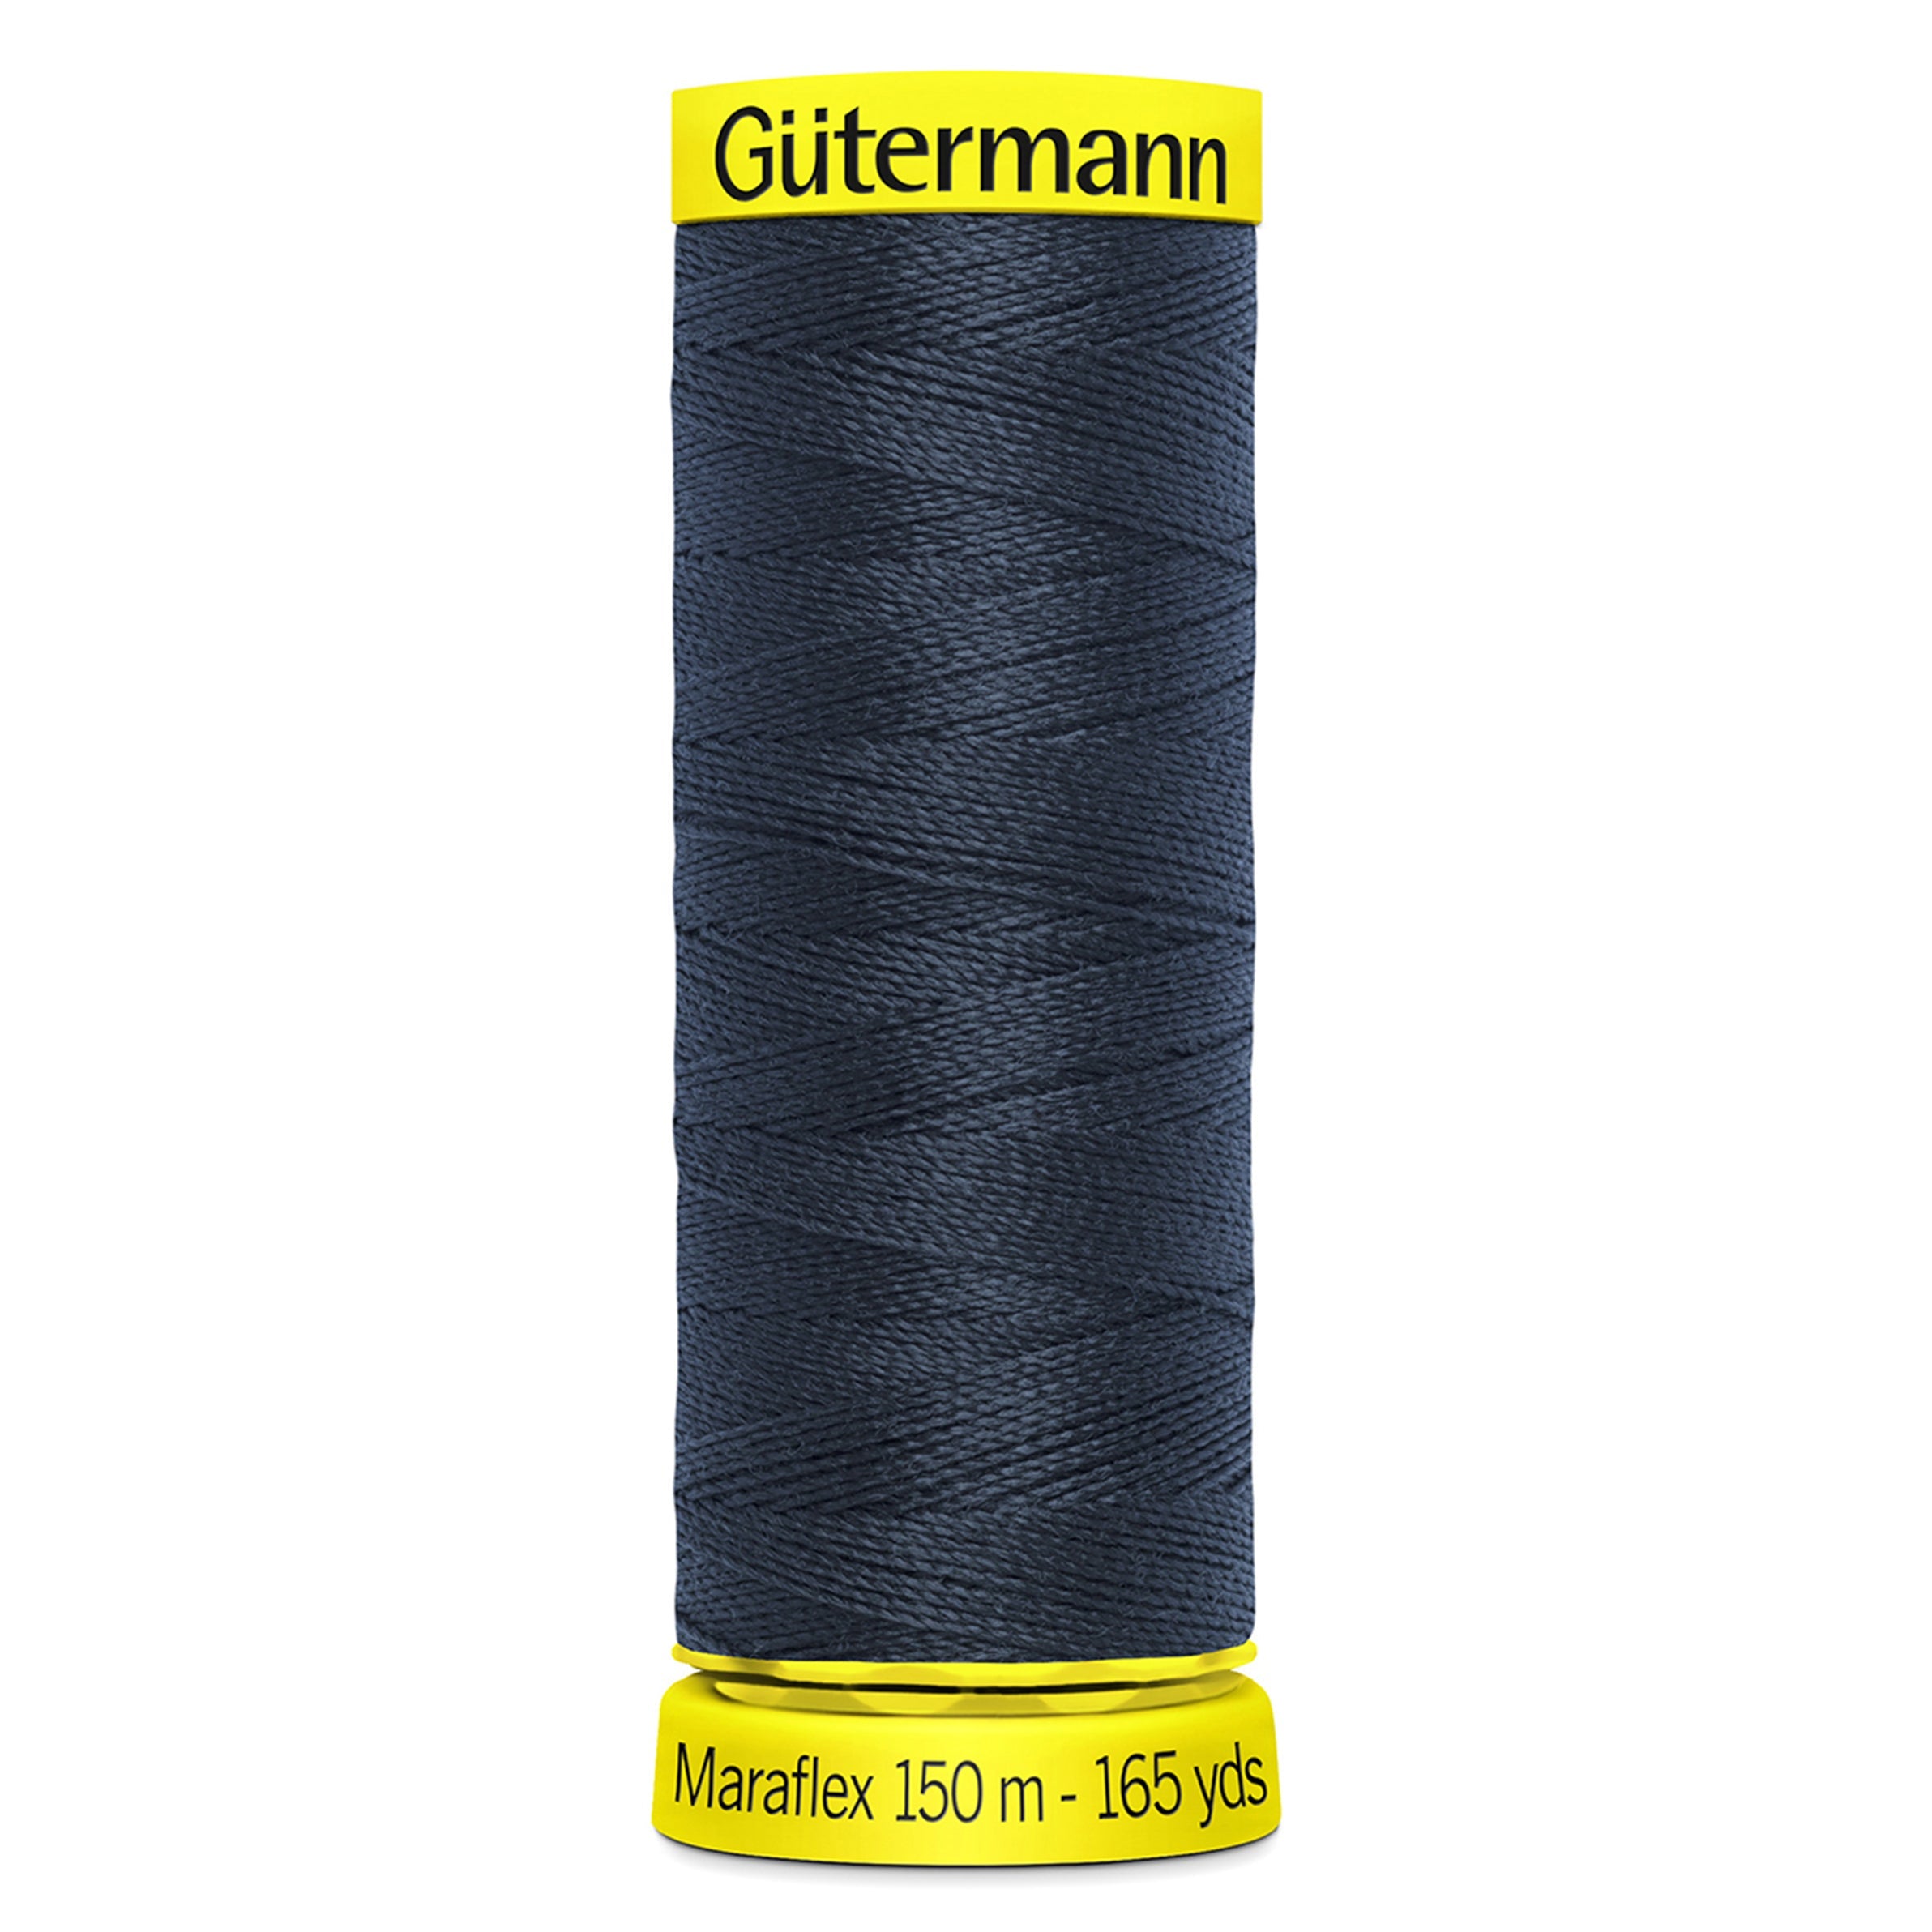 Gutermann Maraflex Stretchy Sewing Thread 150m colour 665 Dark Ink Blue from Jaycotts Sewing Supplies